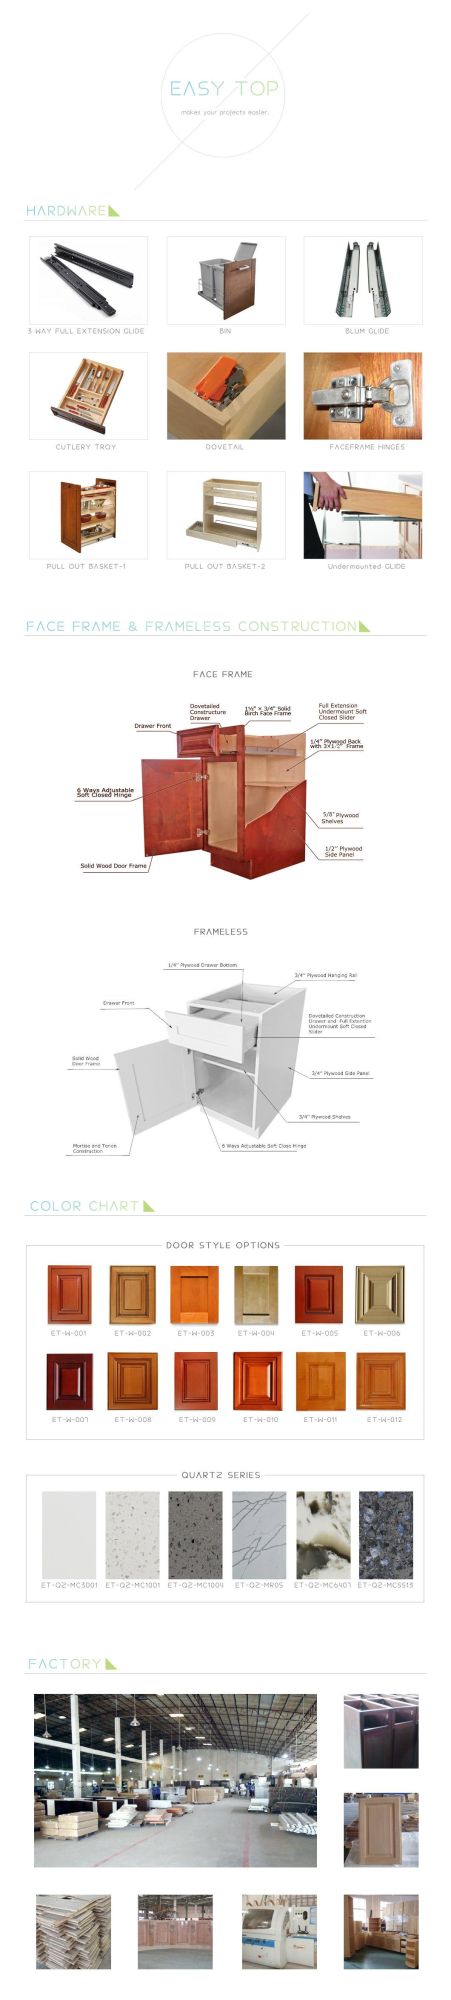 European Cabinets Design White Face Frame Door Solid Wood Kitchen Cupboard